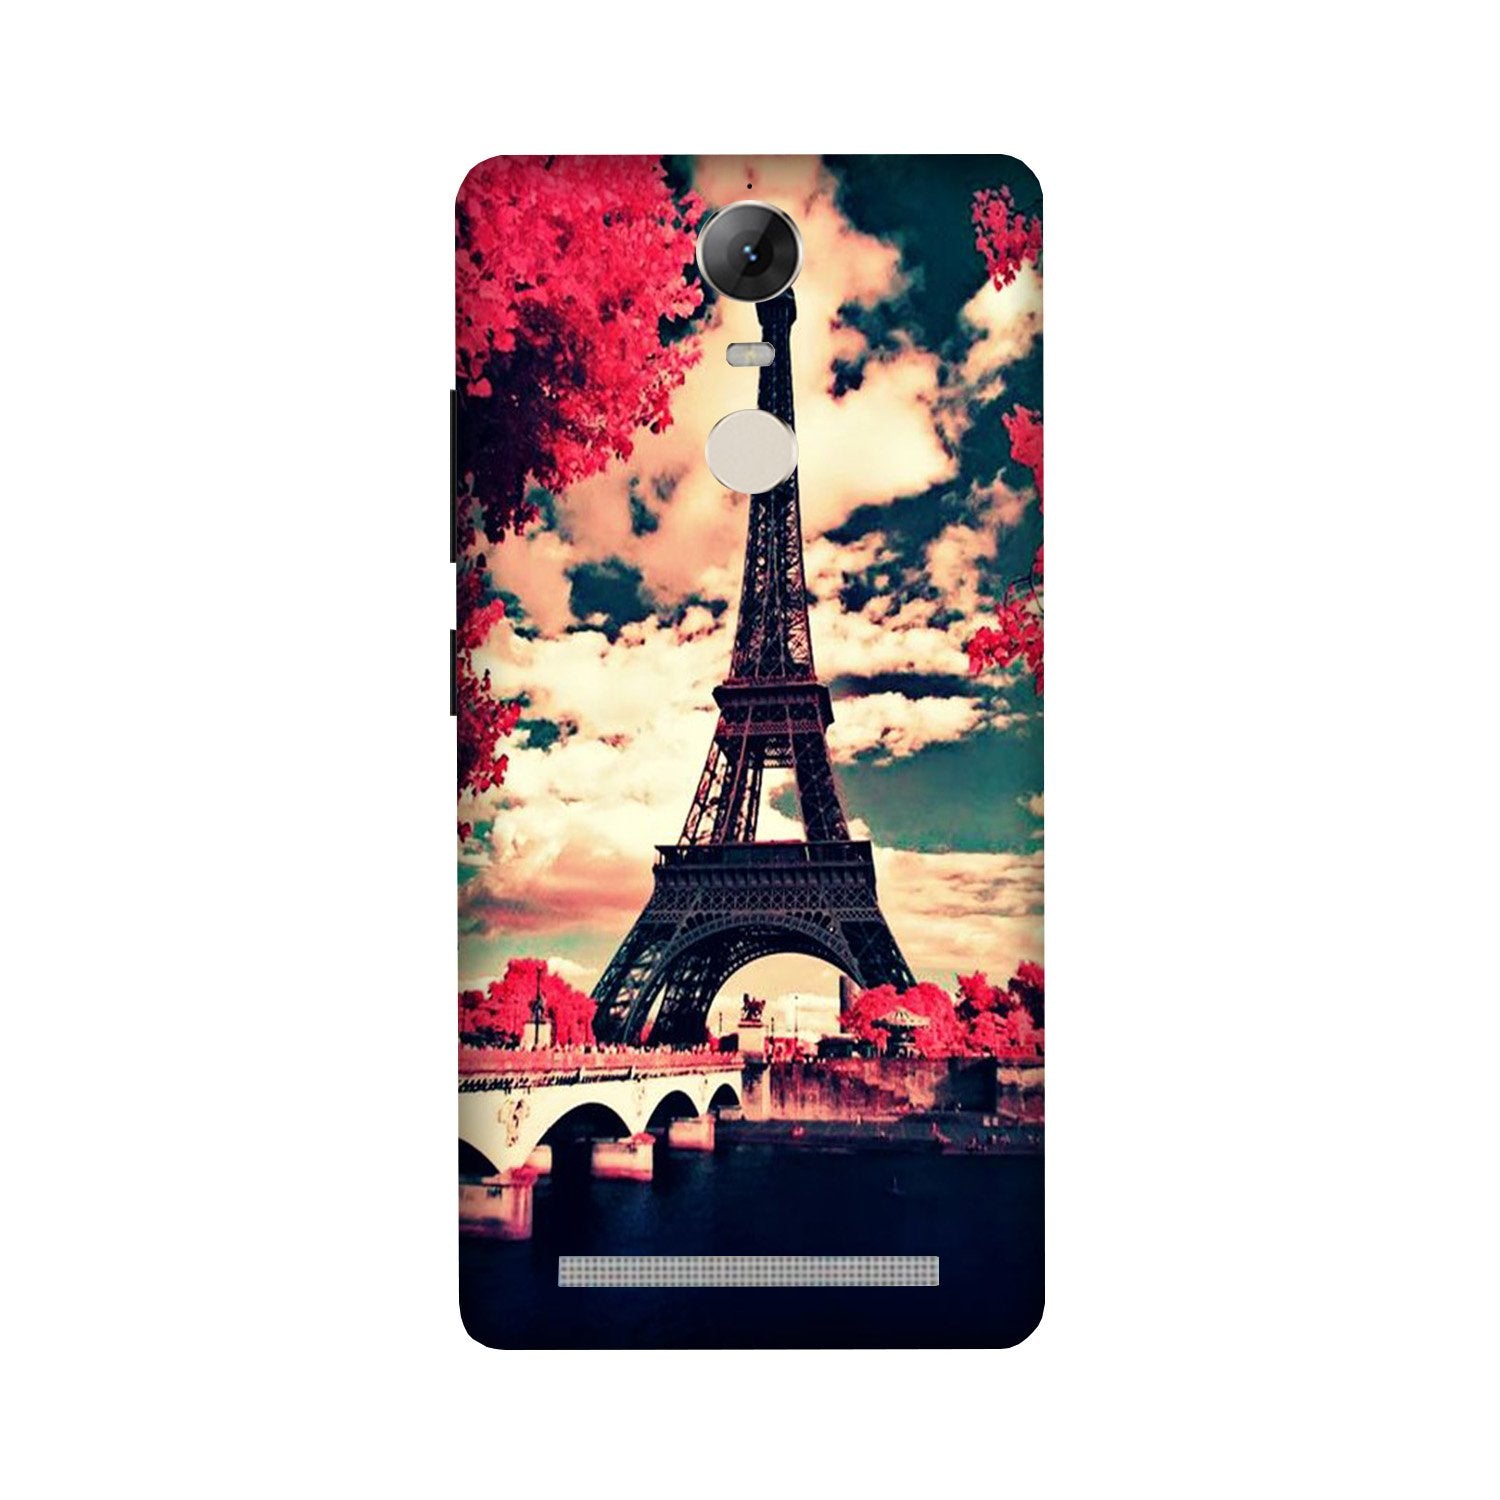 Eiffel Tower Case for Lenovo Vibe K5 Note (Design No. 212)